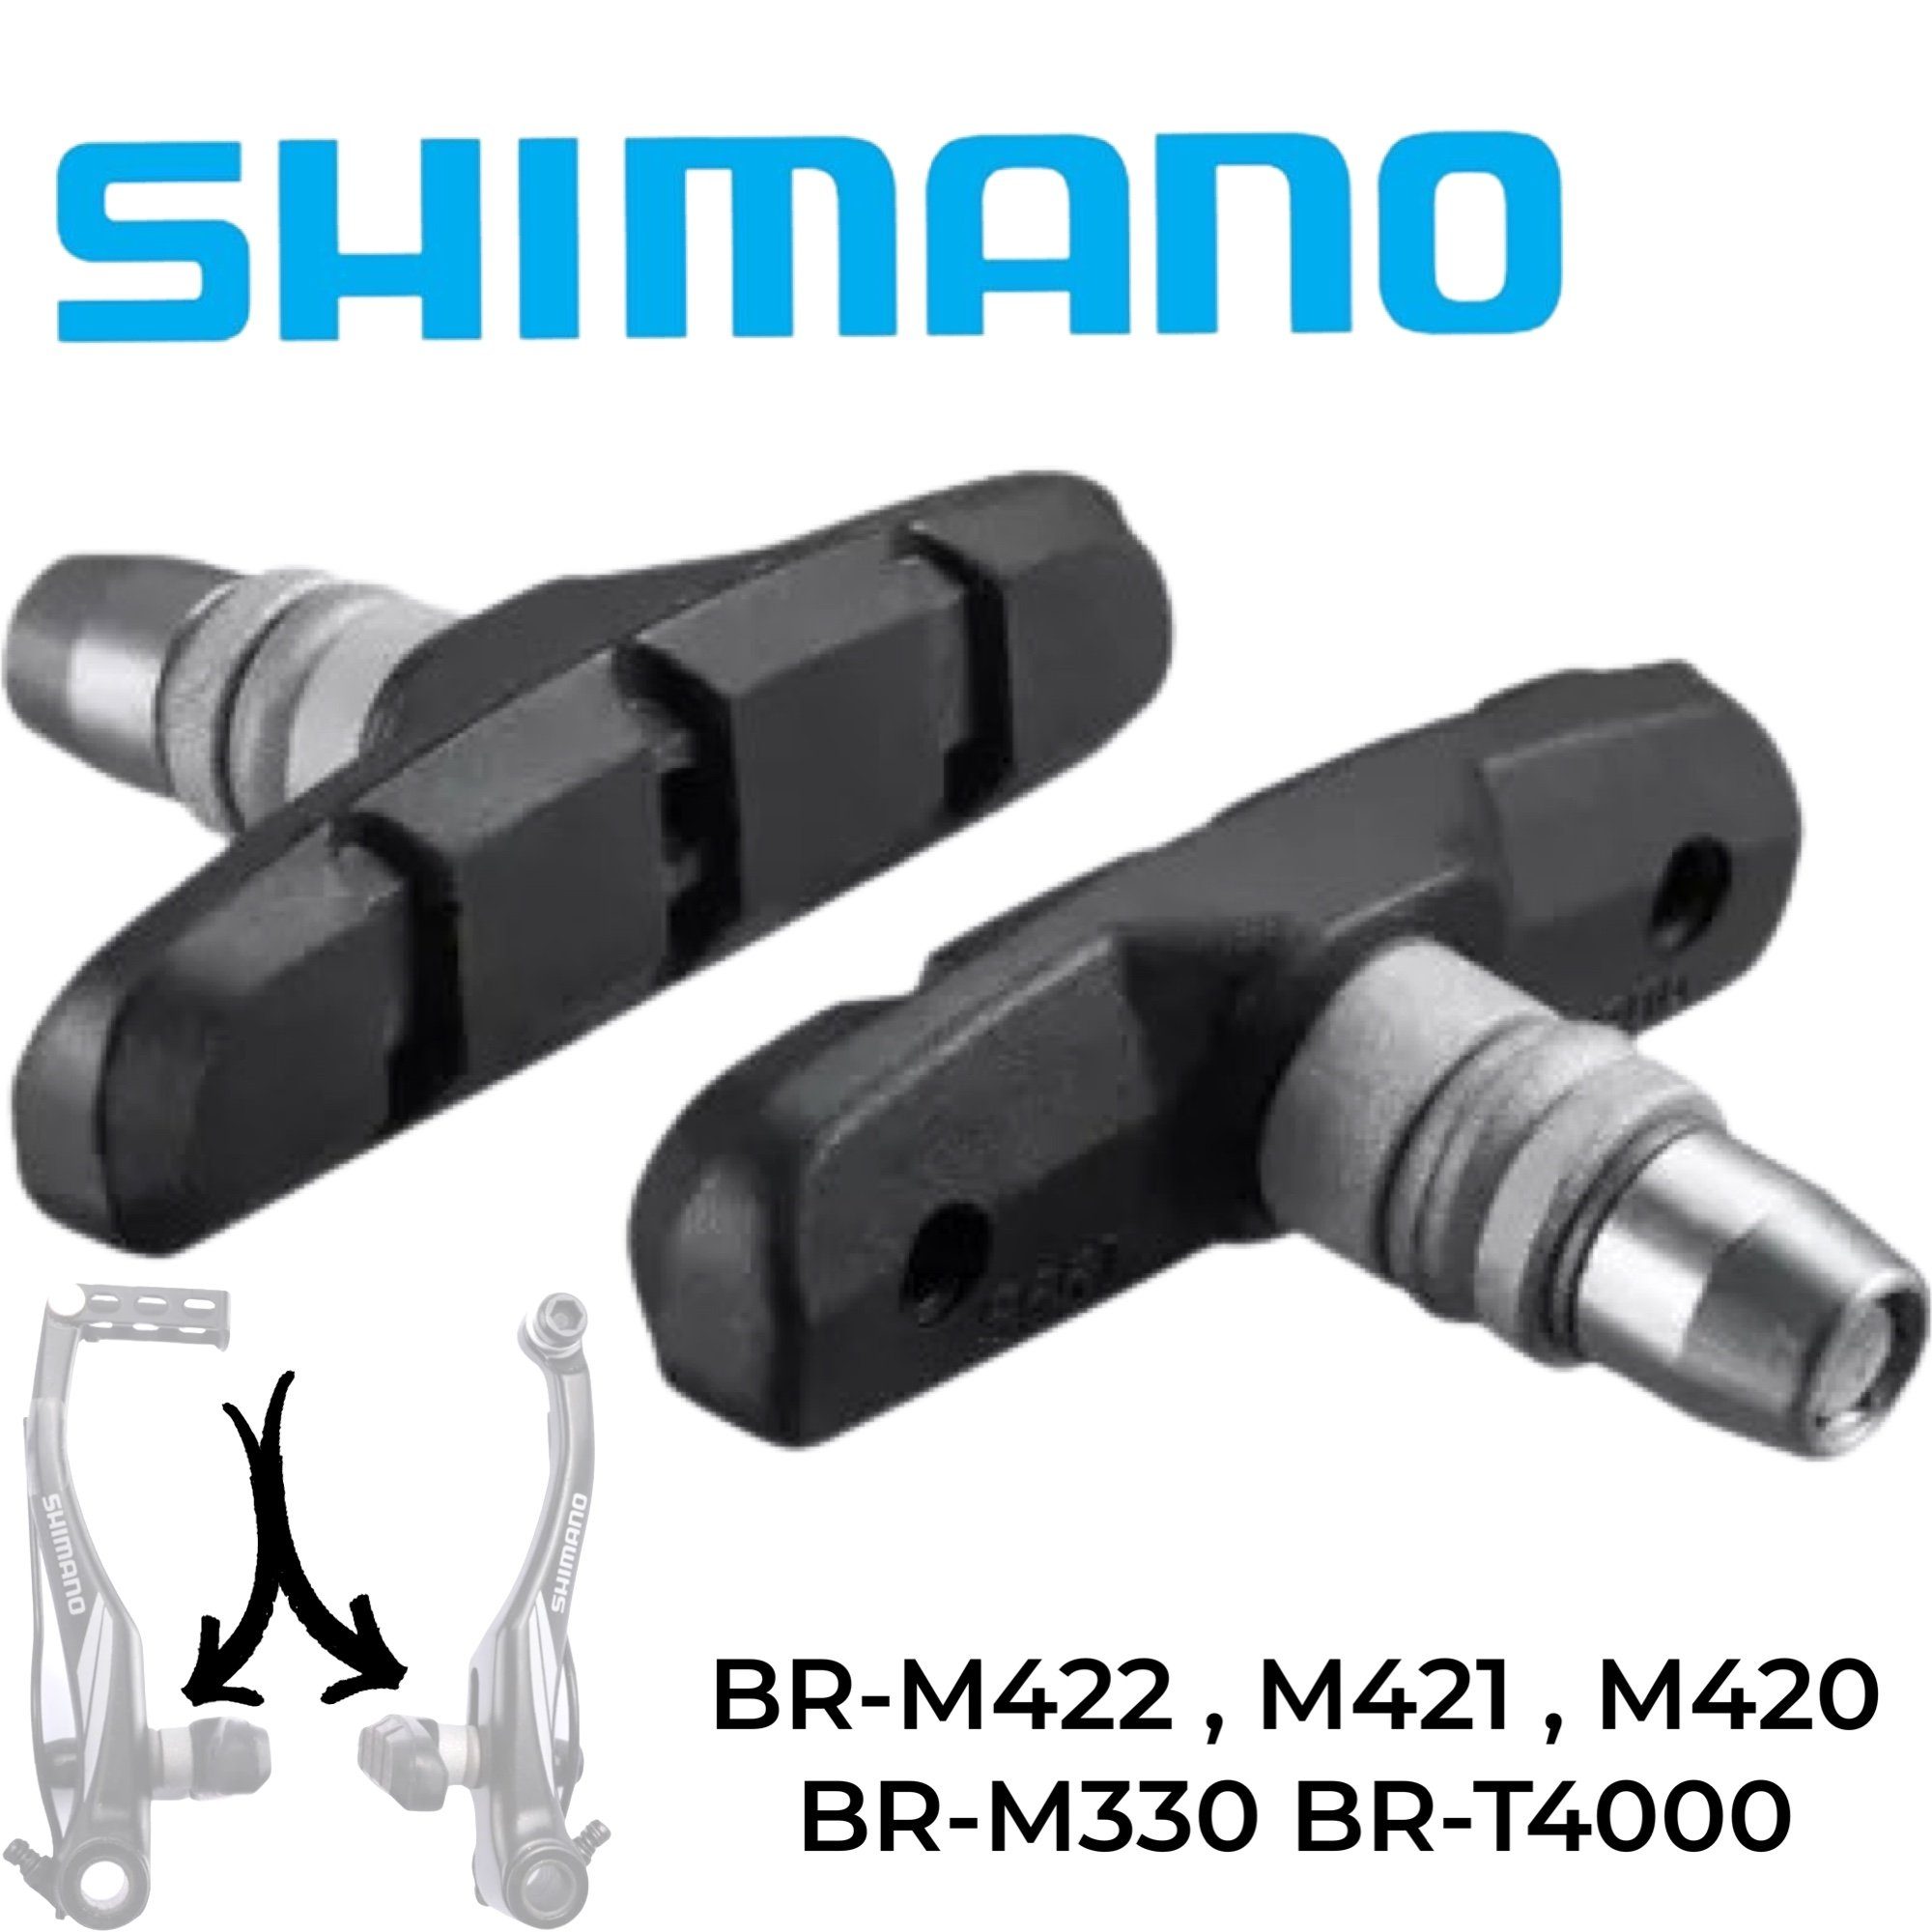 Shimano Felgenbremse SHIMANO Fahrrad V-Brake Bremse Ersatz Bremsschuh S70T 1Paar schwarz